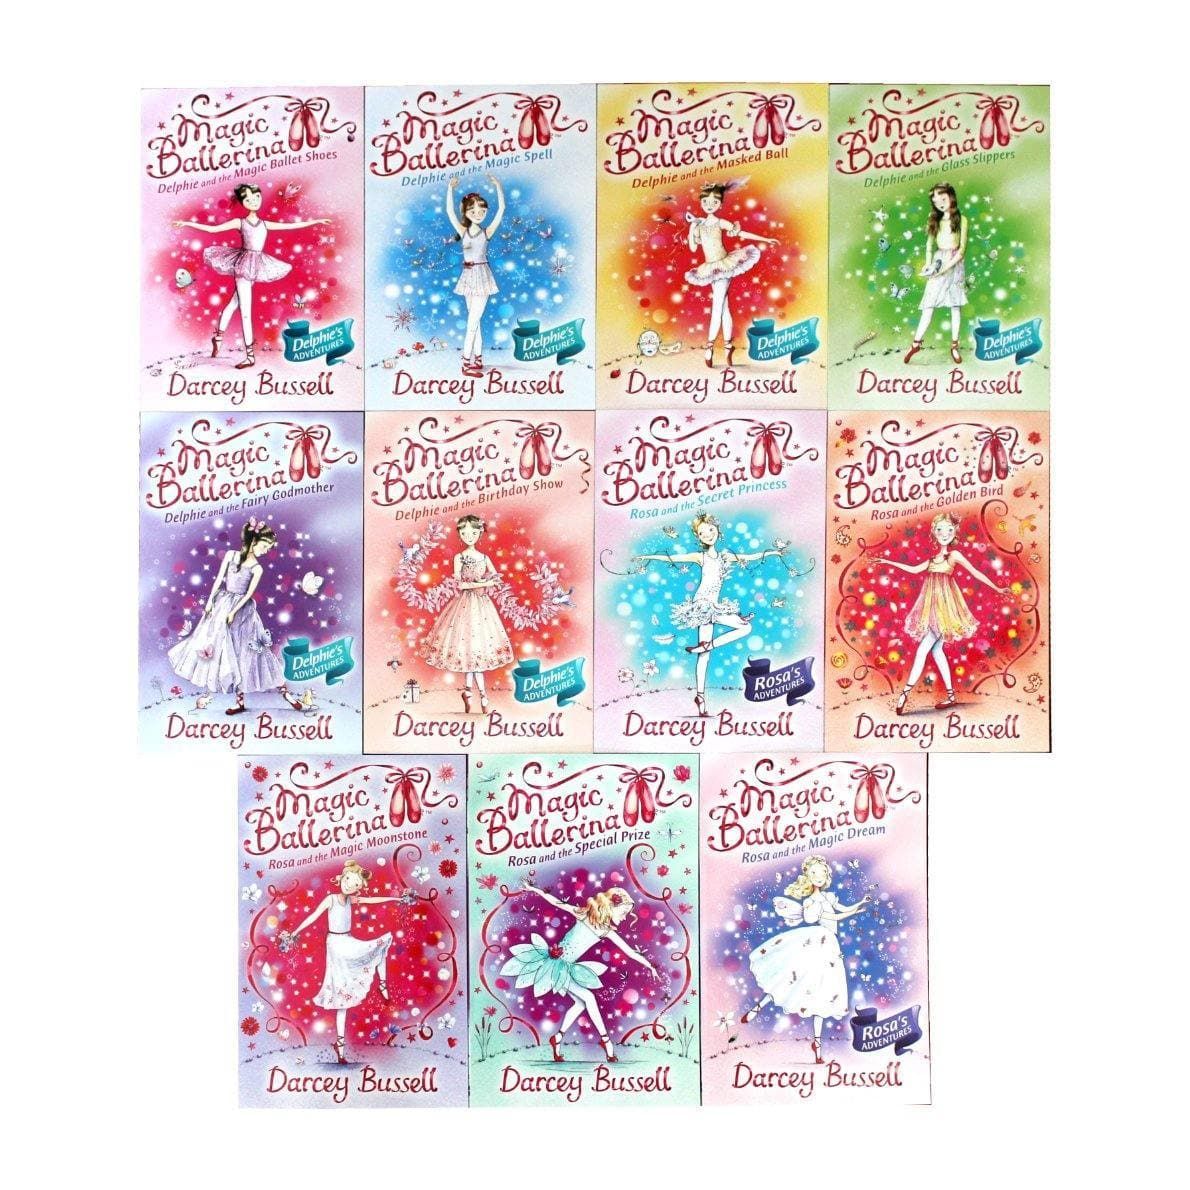  Magic Ballerina The Complete Collection (22 books) 